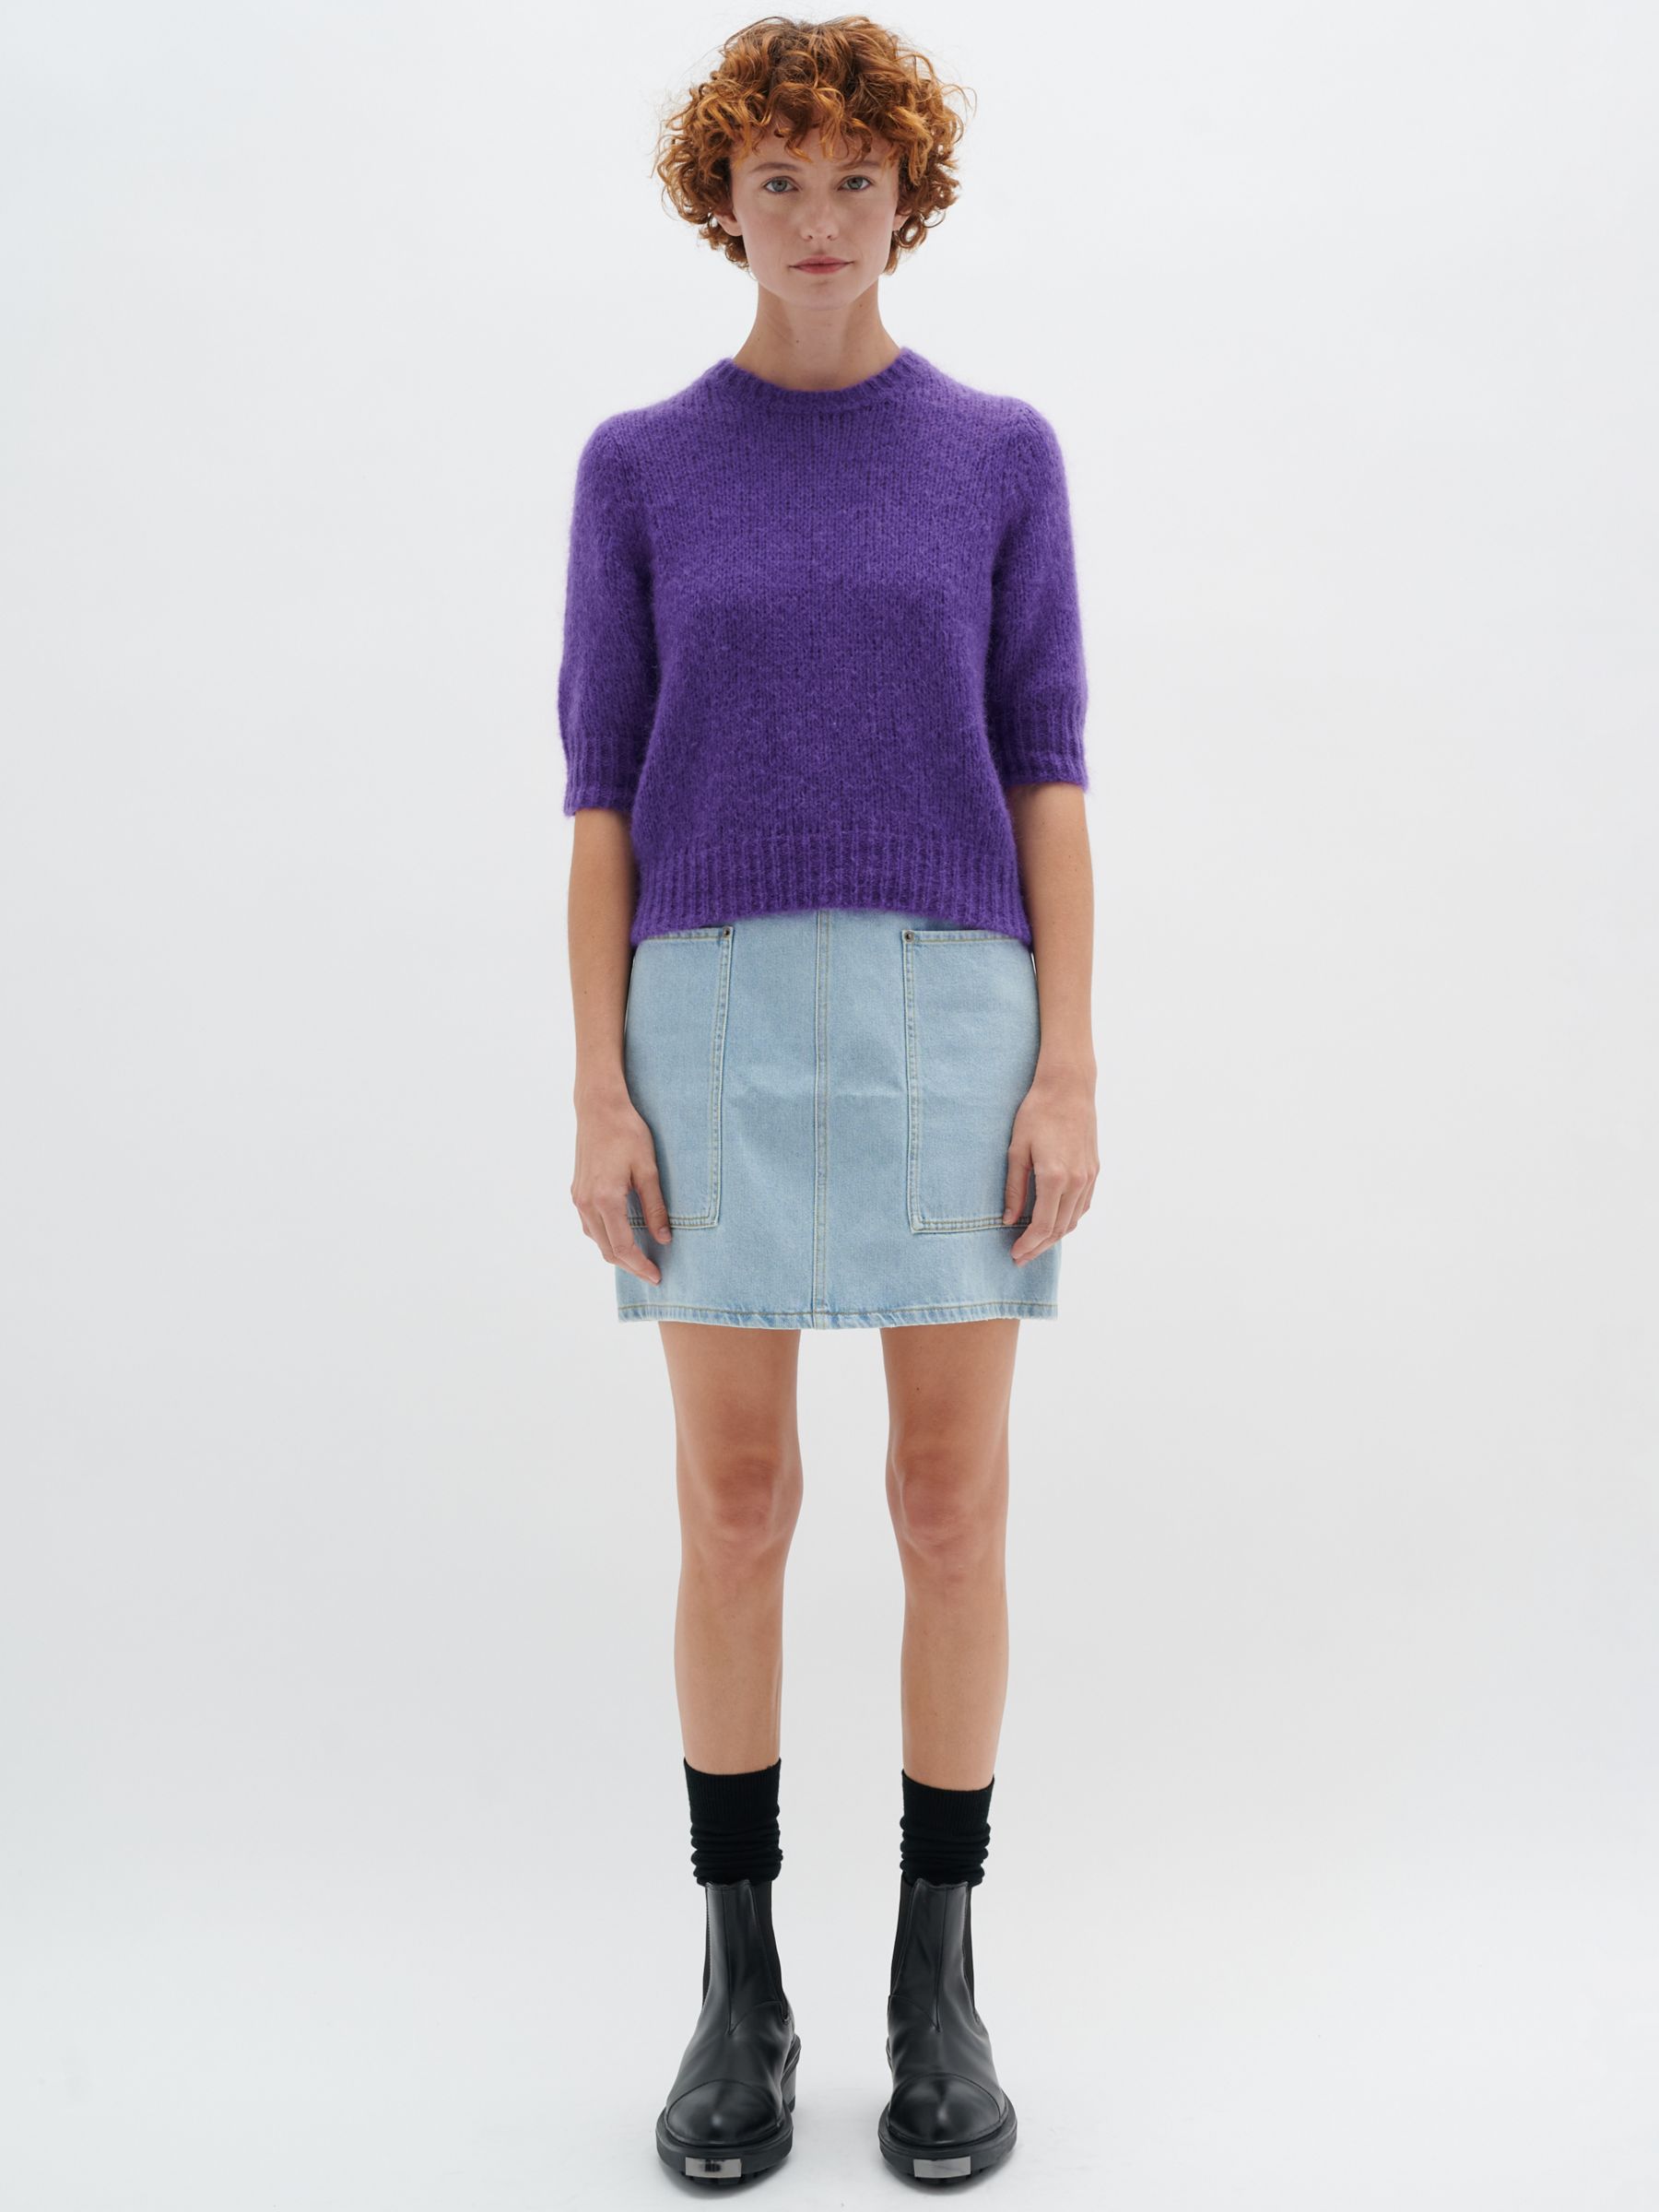 InWear Iole Short Sleeve Knitted Top, Purple Rain at John Lewis & Partners